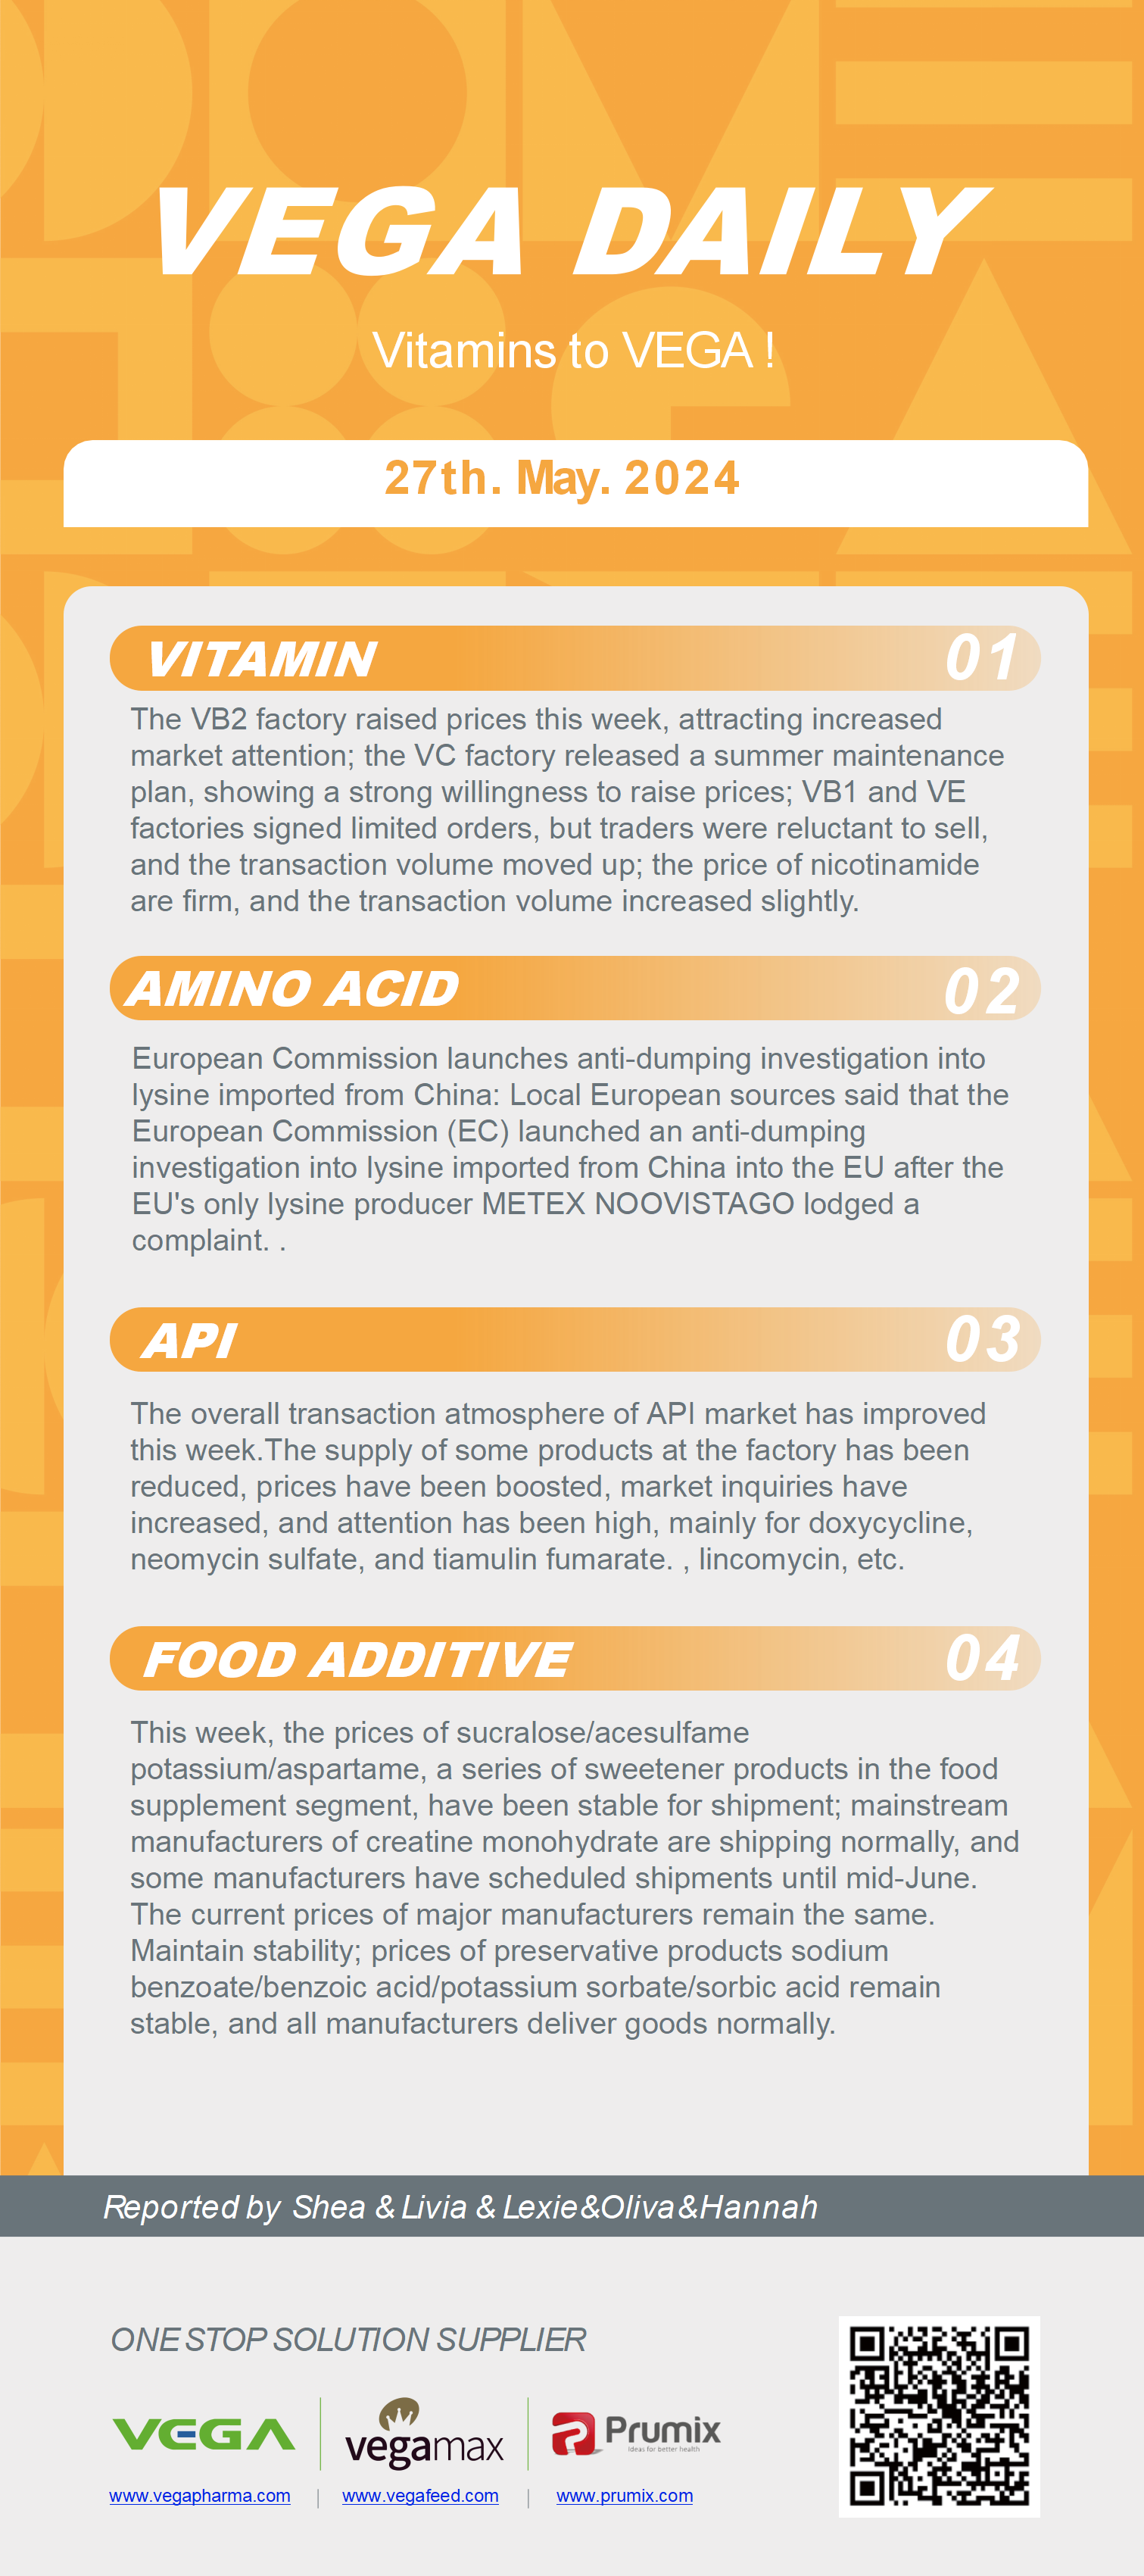 Vega Daily Dated on May 27th 2024 Vitamin Amino Acid APl Food Additives.png